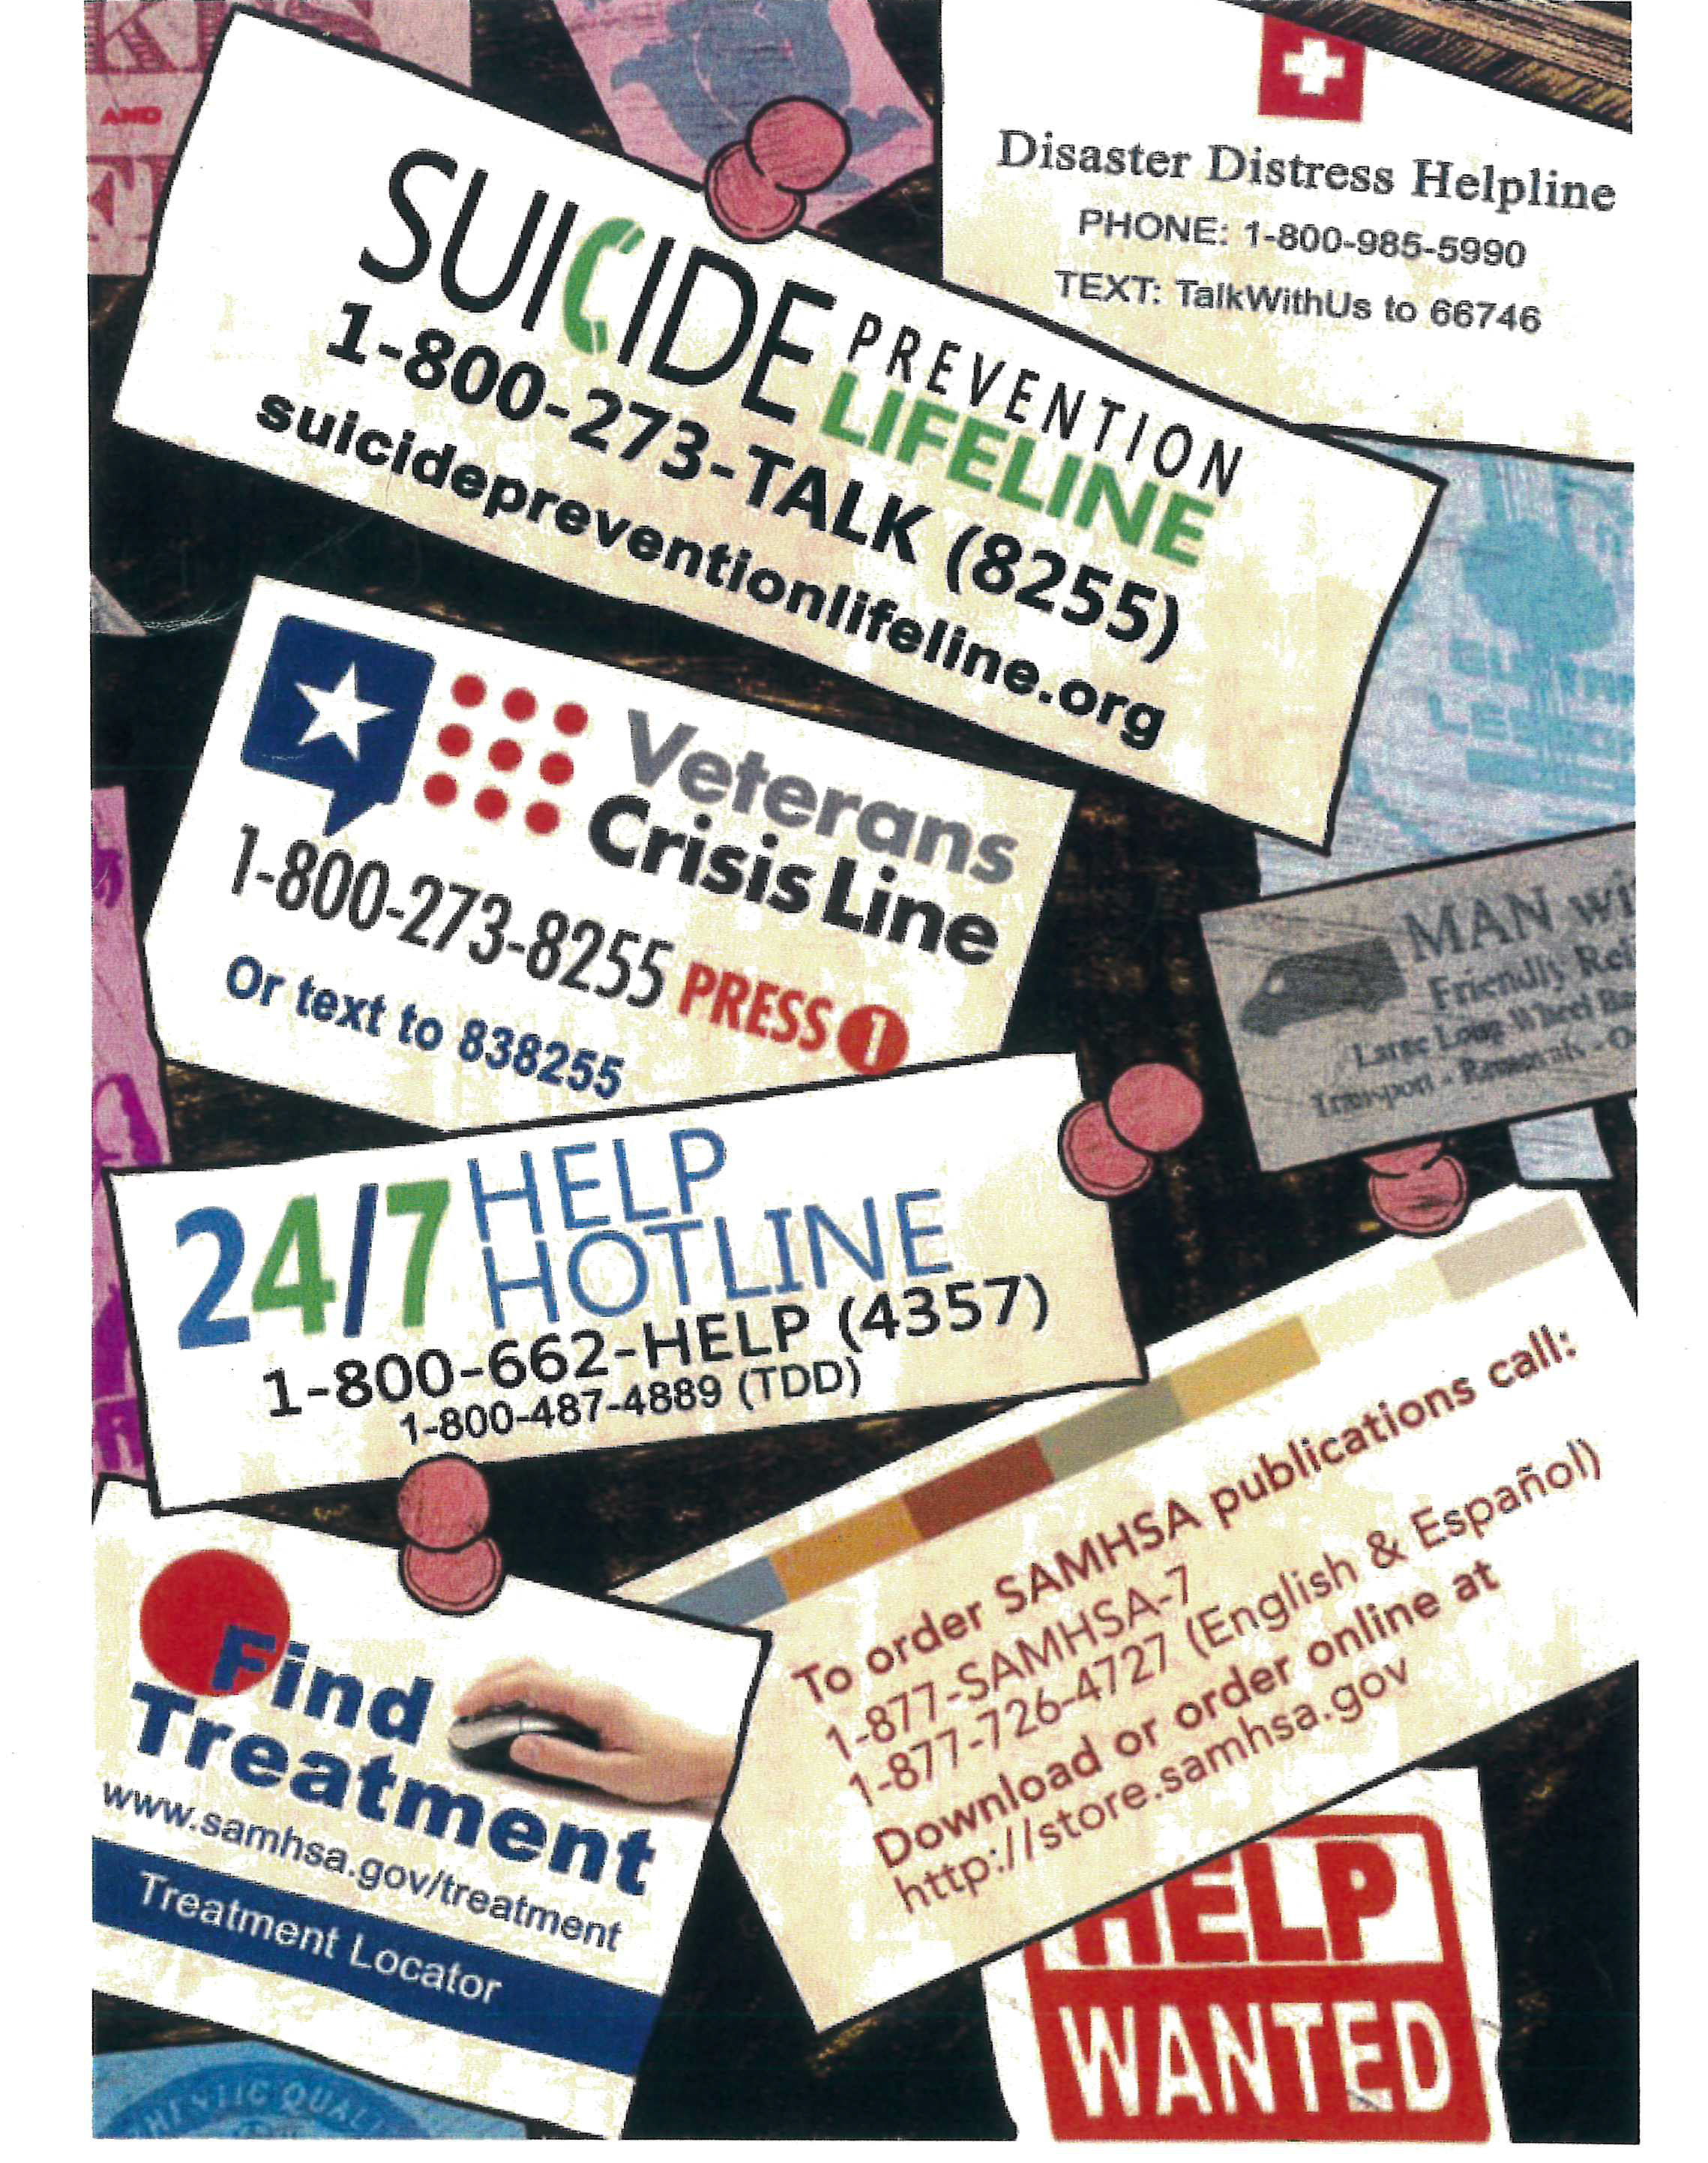 The Suicide Prevention Lifeline flyer.